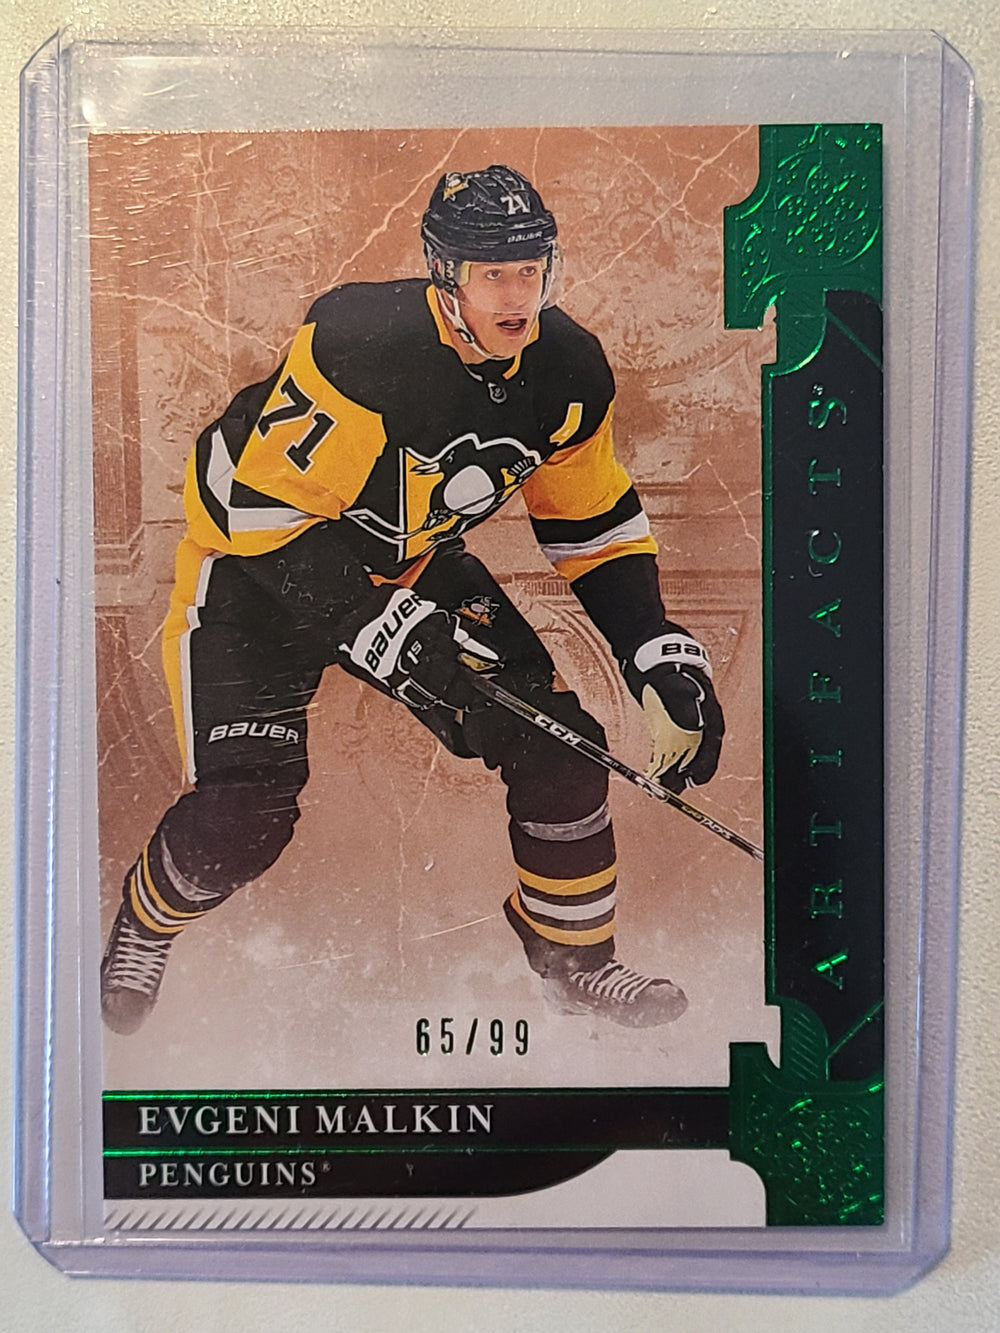 2019-20 Artifacts Emerald Variation #135 Evgeni Malkin Pittsburgh Penguins 65/99